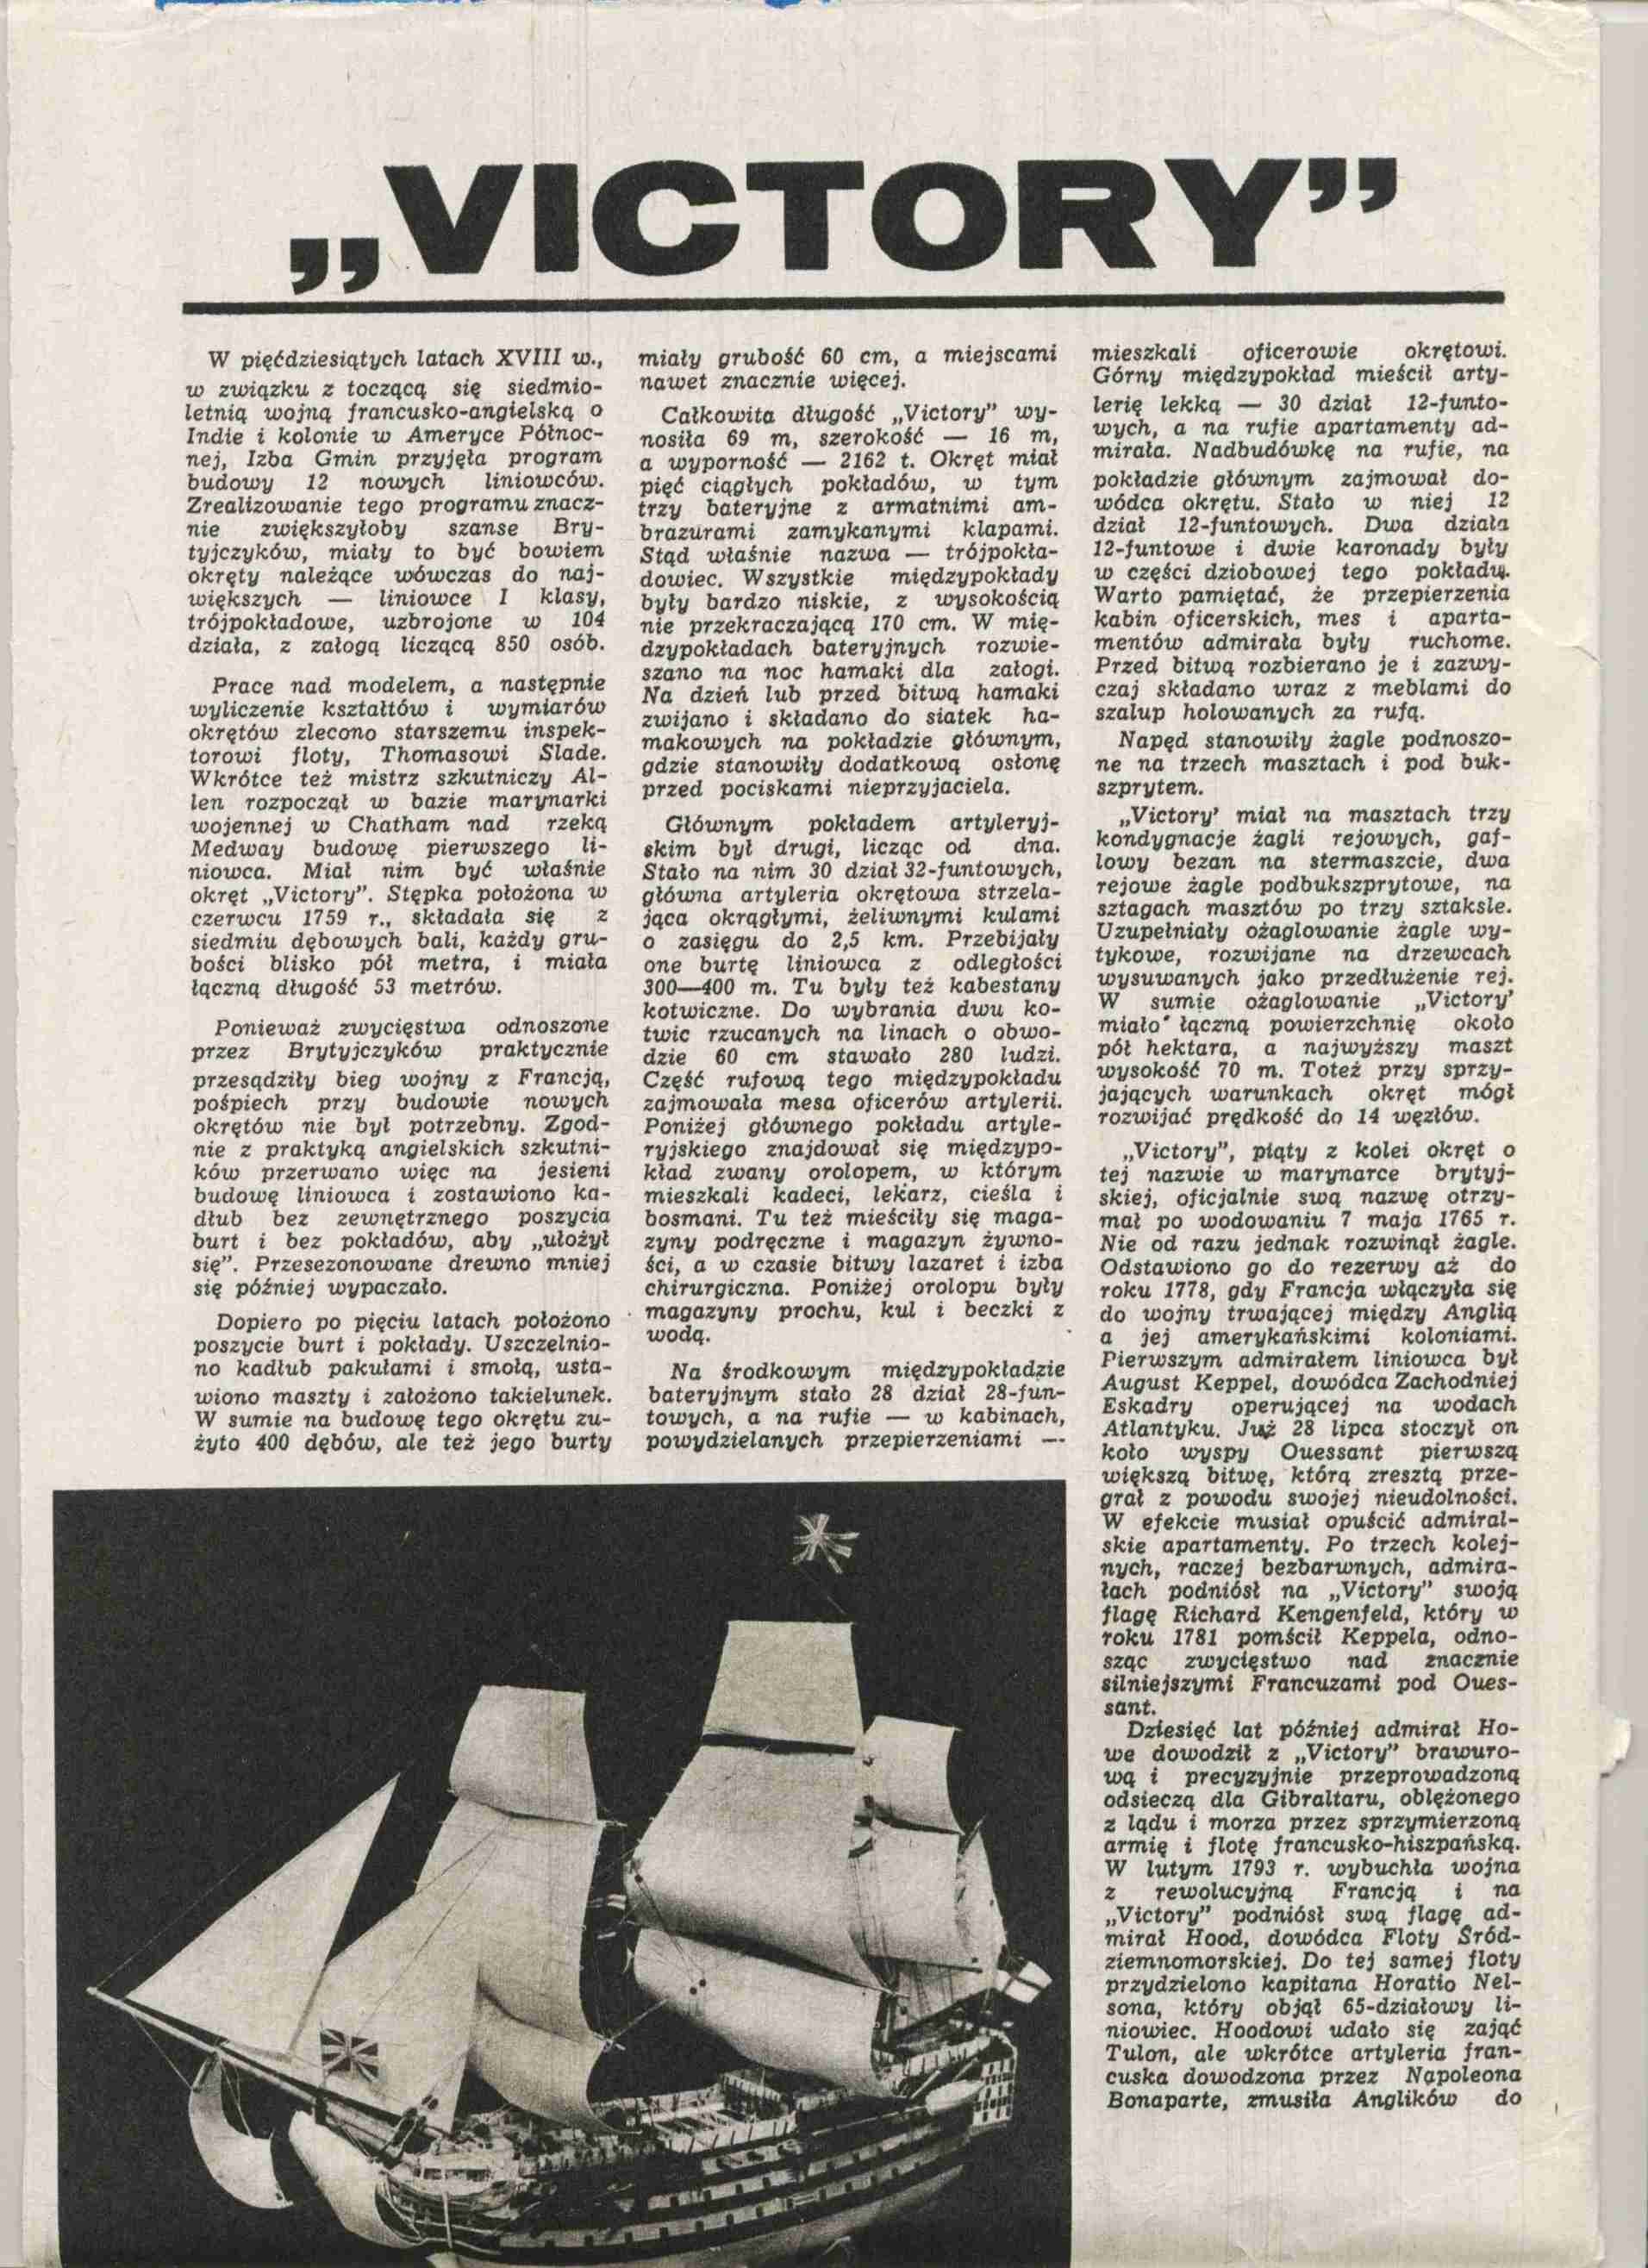 "Maly Modelarz" 3-4, 1986, 2 c.